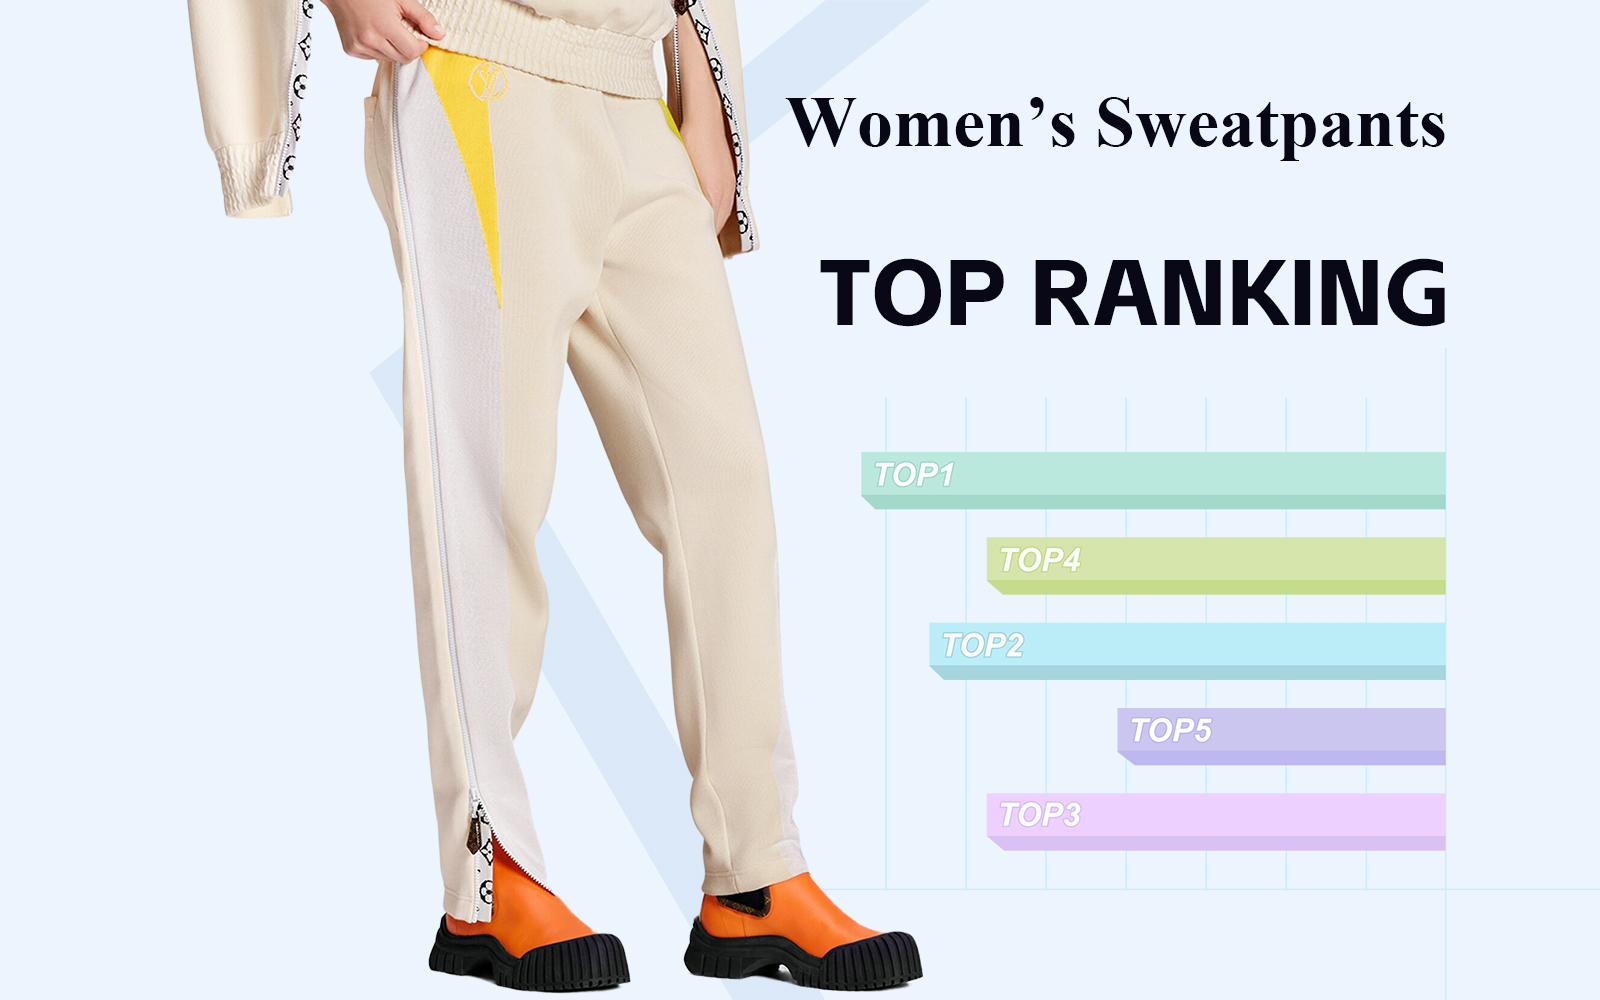 Sweatpants -- The TOP Ranking of Womenswear